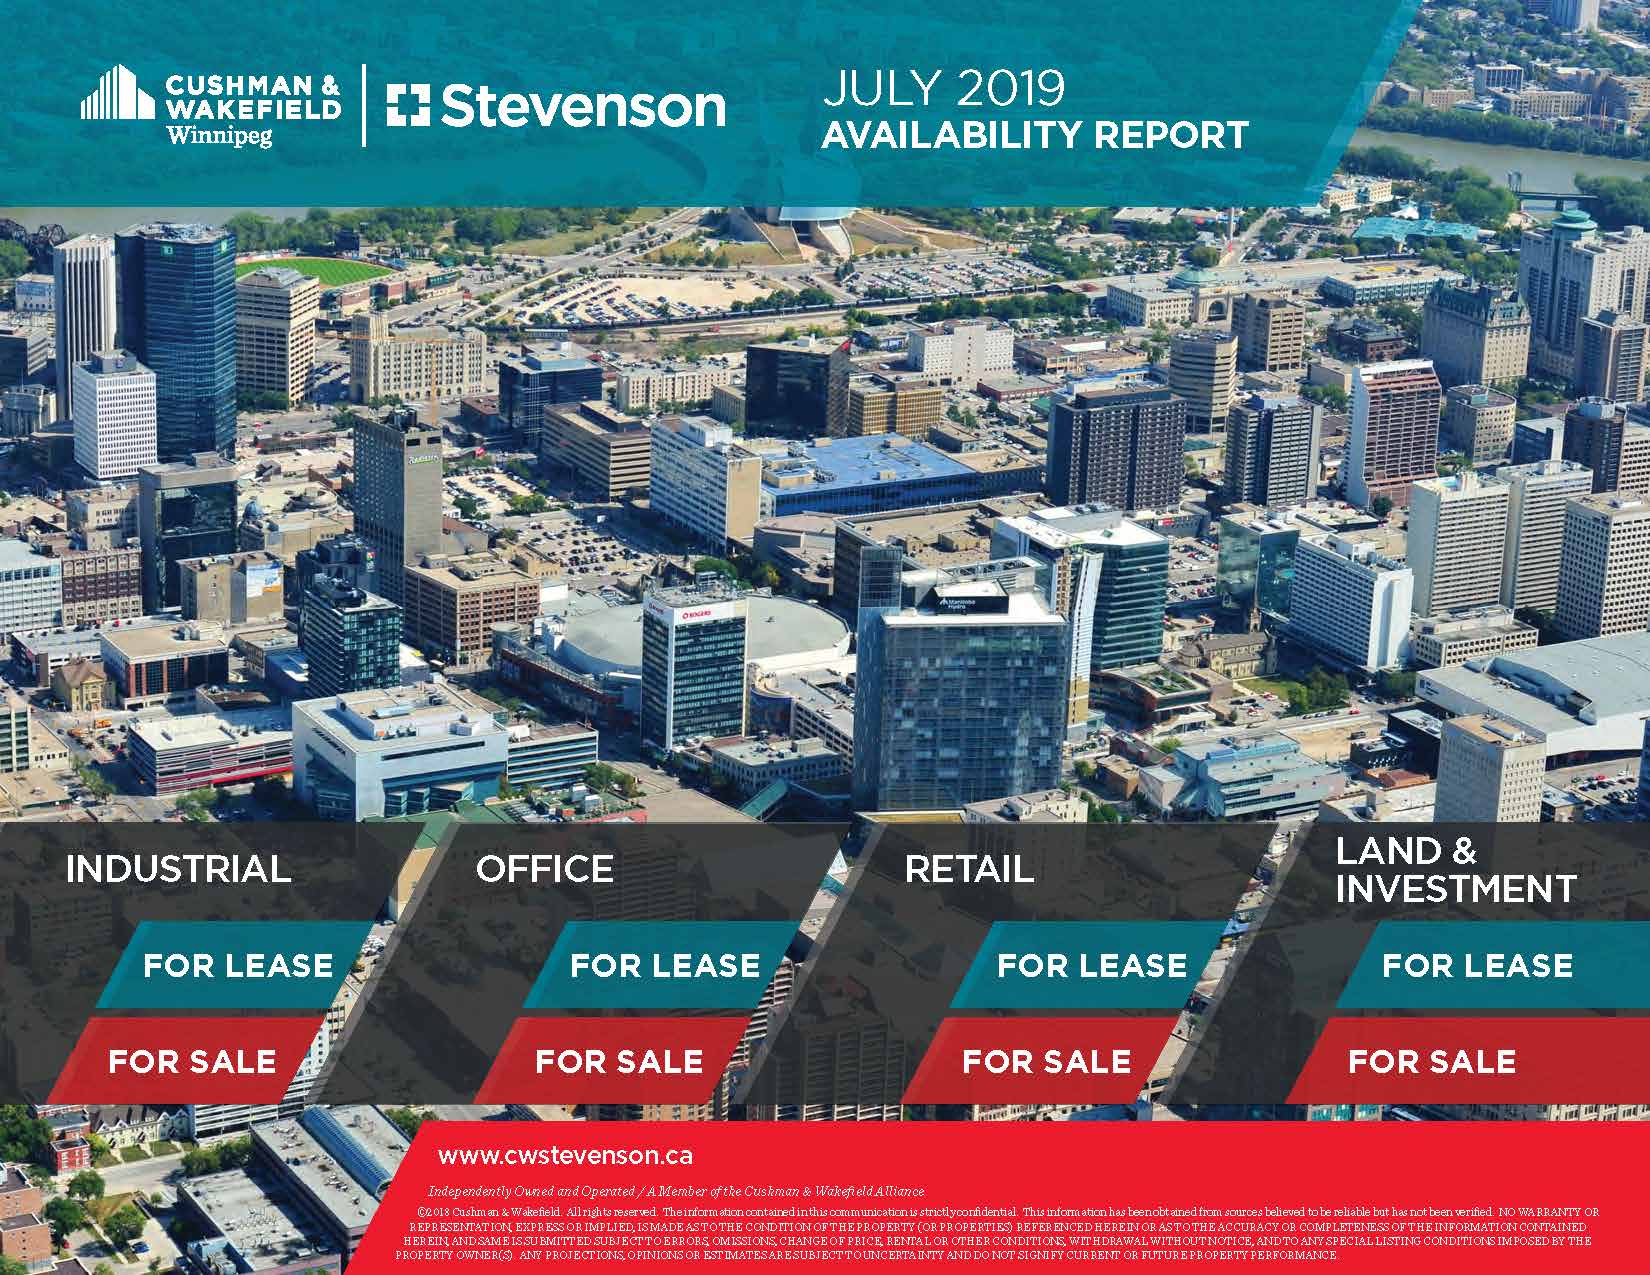 July 2019 property availability report in winnipeg, cws cushman wakefield Stevenson